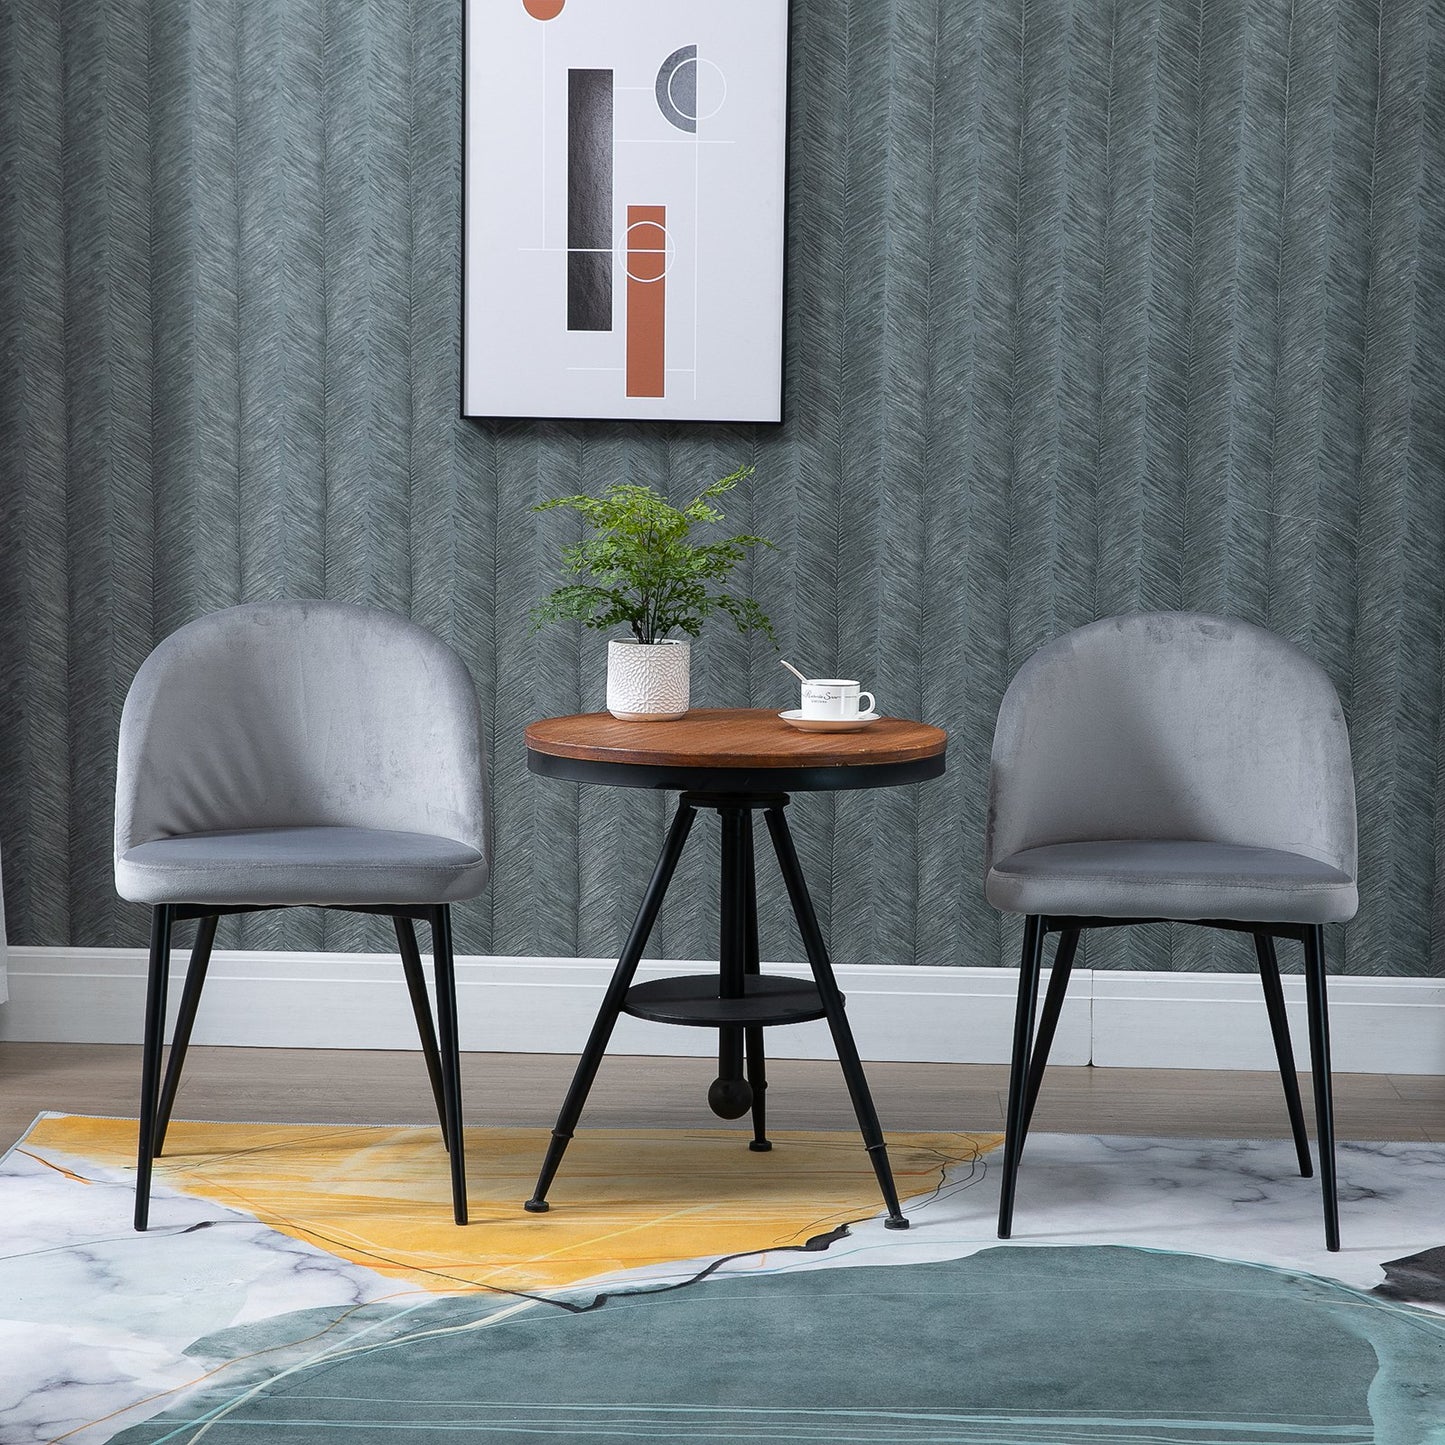 HOMCOM Velvet Contemporary Set Of 2 Kitchen Dining Chairs Grey